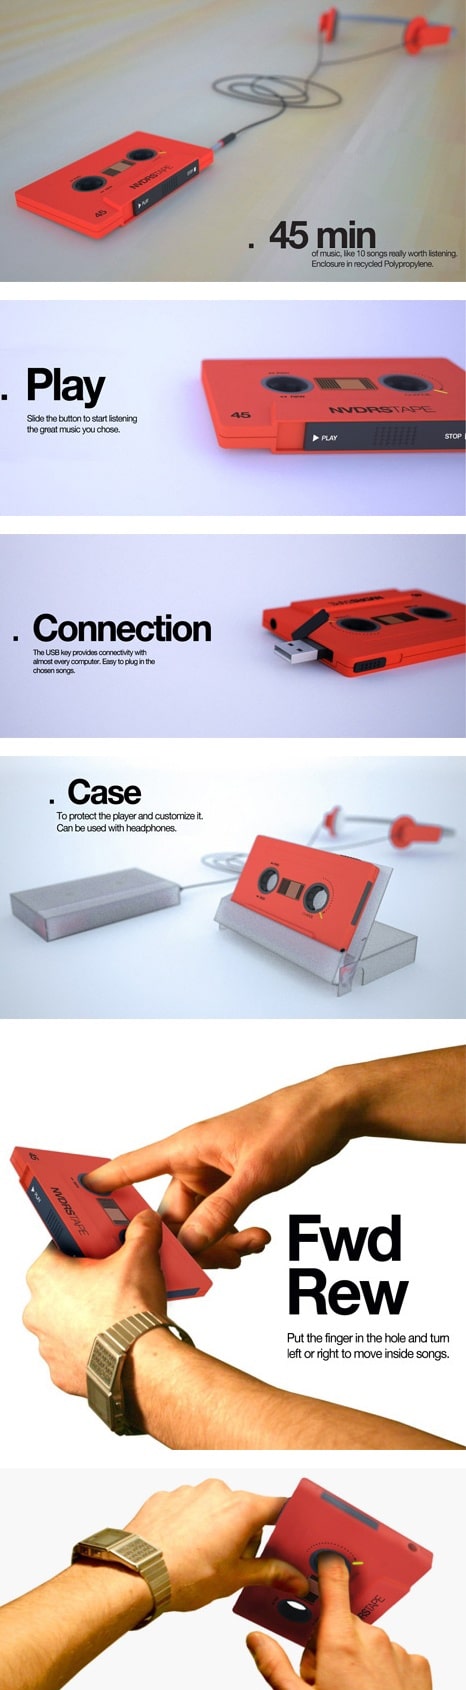 Retrofied Cassette MP3 Player Design